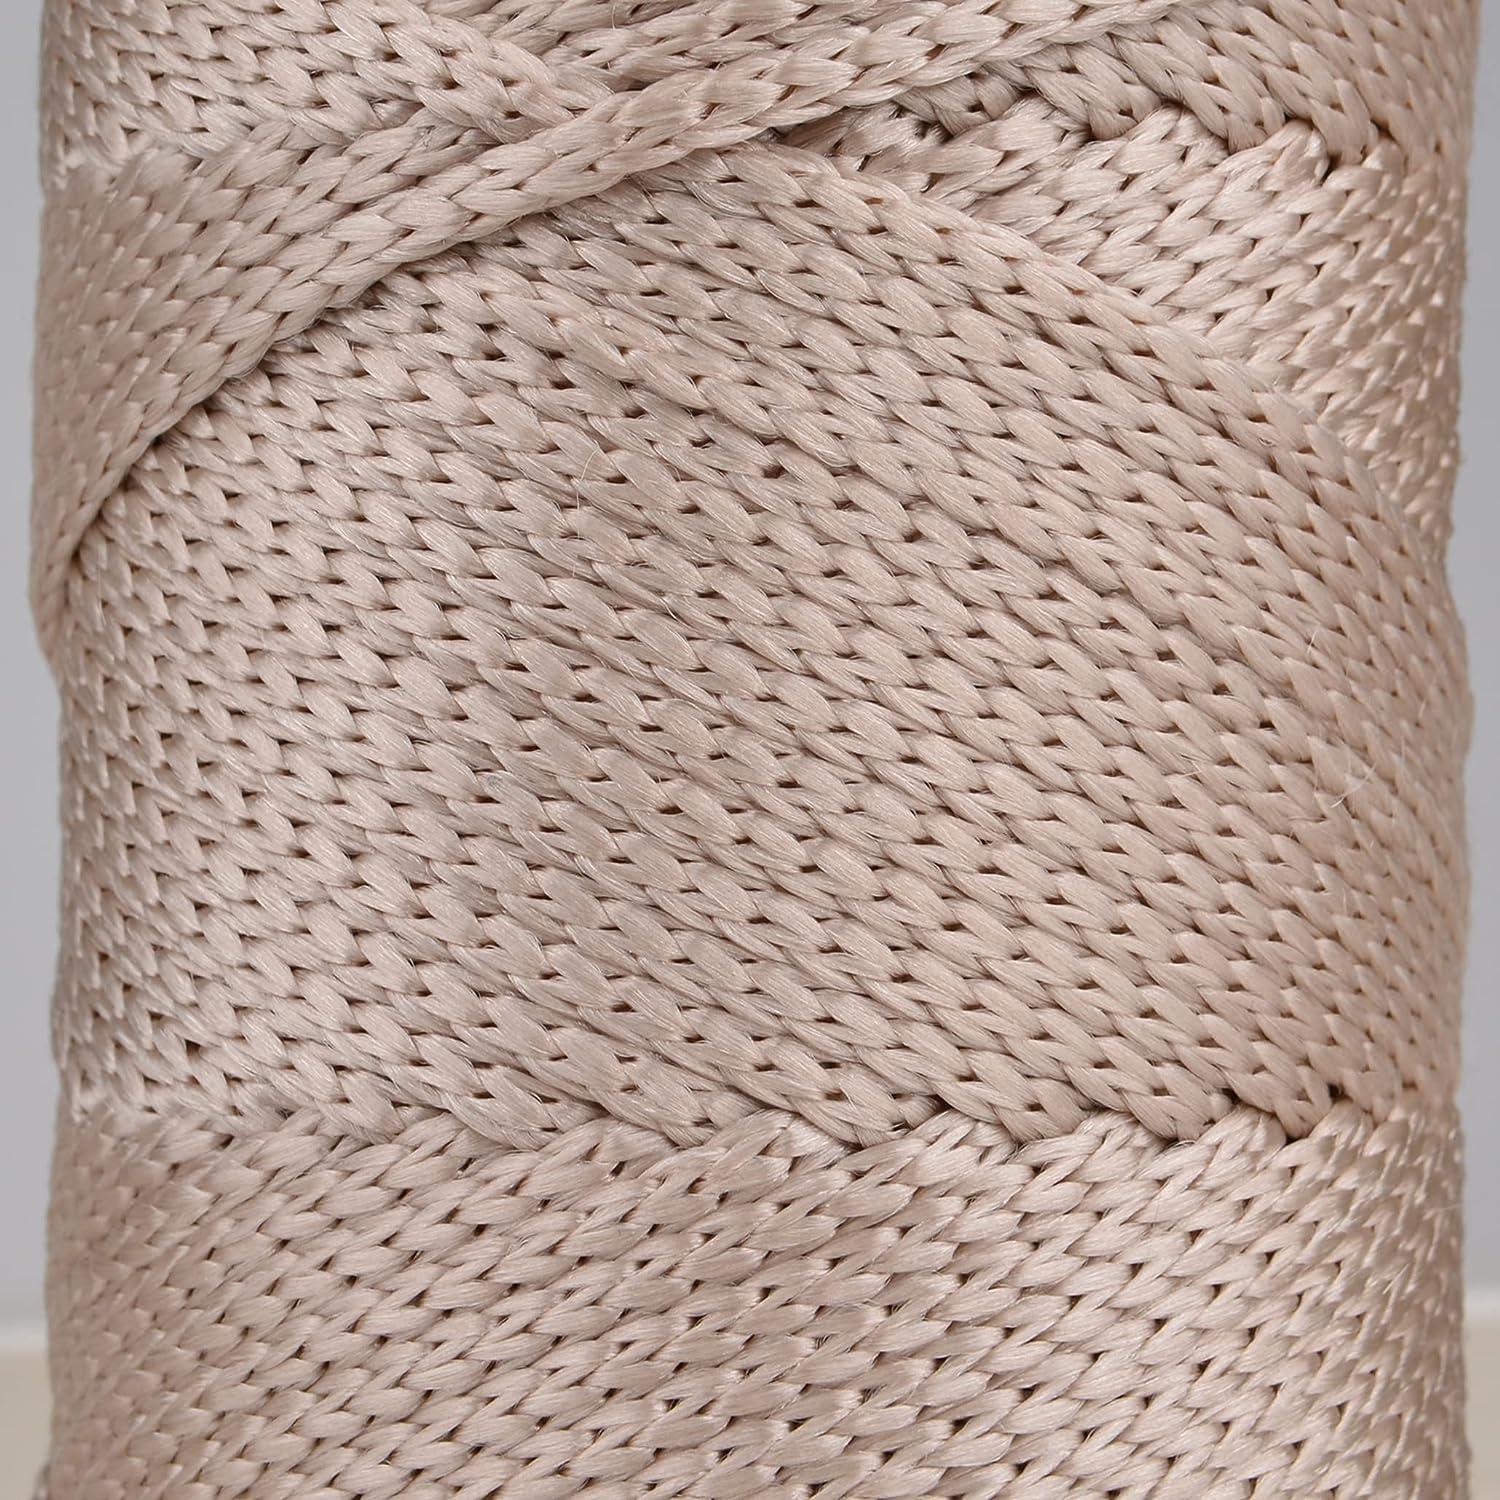 Lukche 4mm Macrame Cord Premium 100% Polypropylene 104 Yards Polyester Rope,Colorful Yarn Crochet Macrame Bag Craft for Wall Hangers, Bags, Bottom